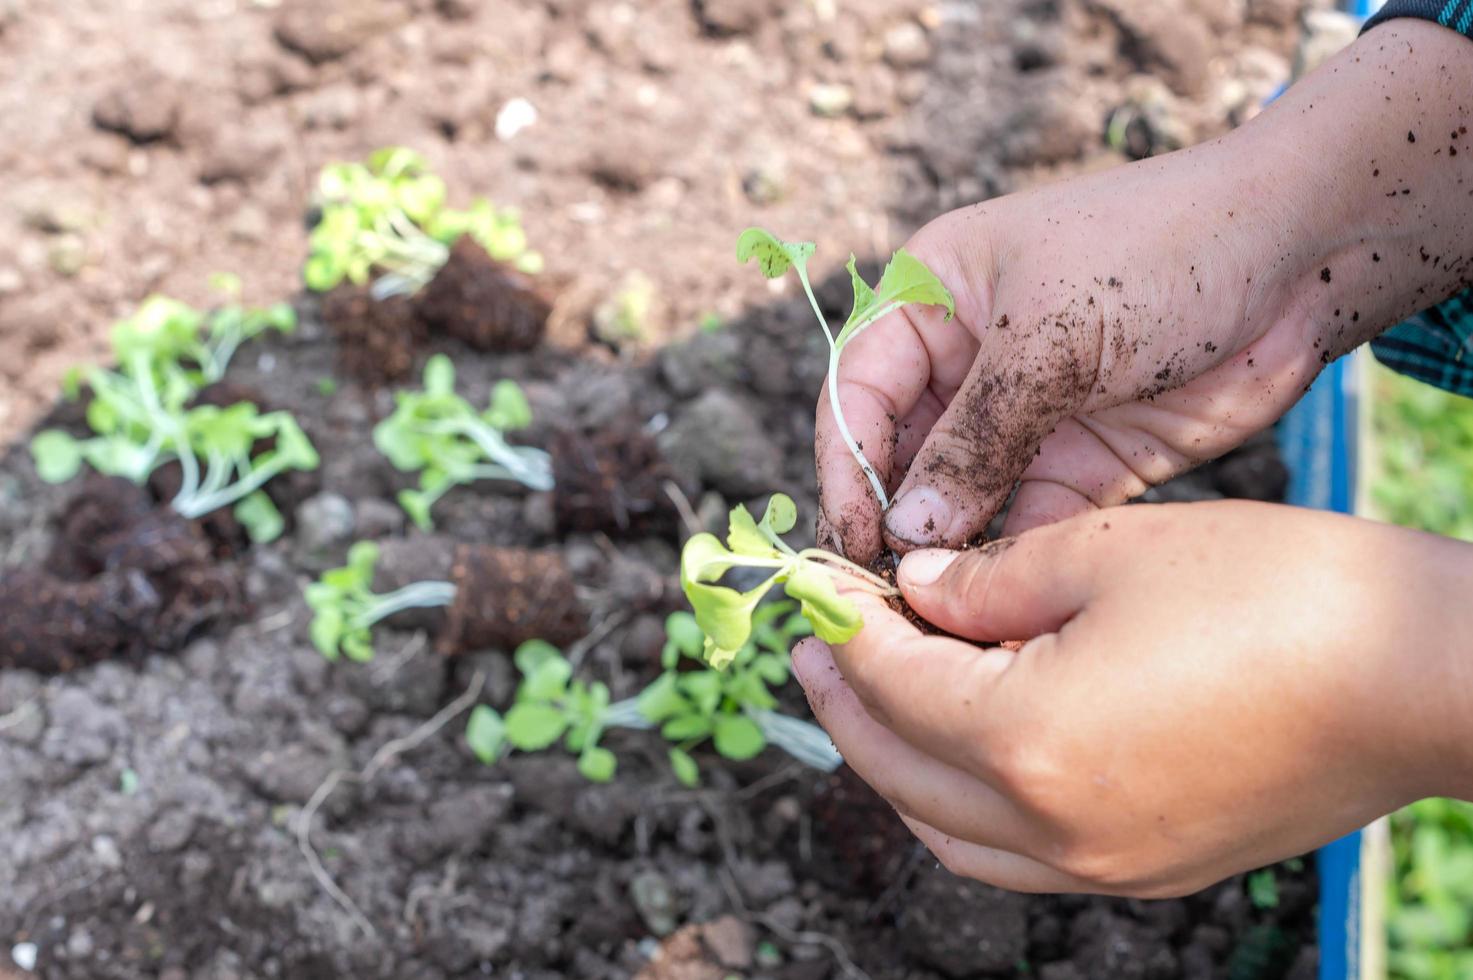 fermer agriculteur femelle main plantation germer avec le vert salade dans fertile sol. photo